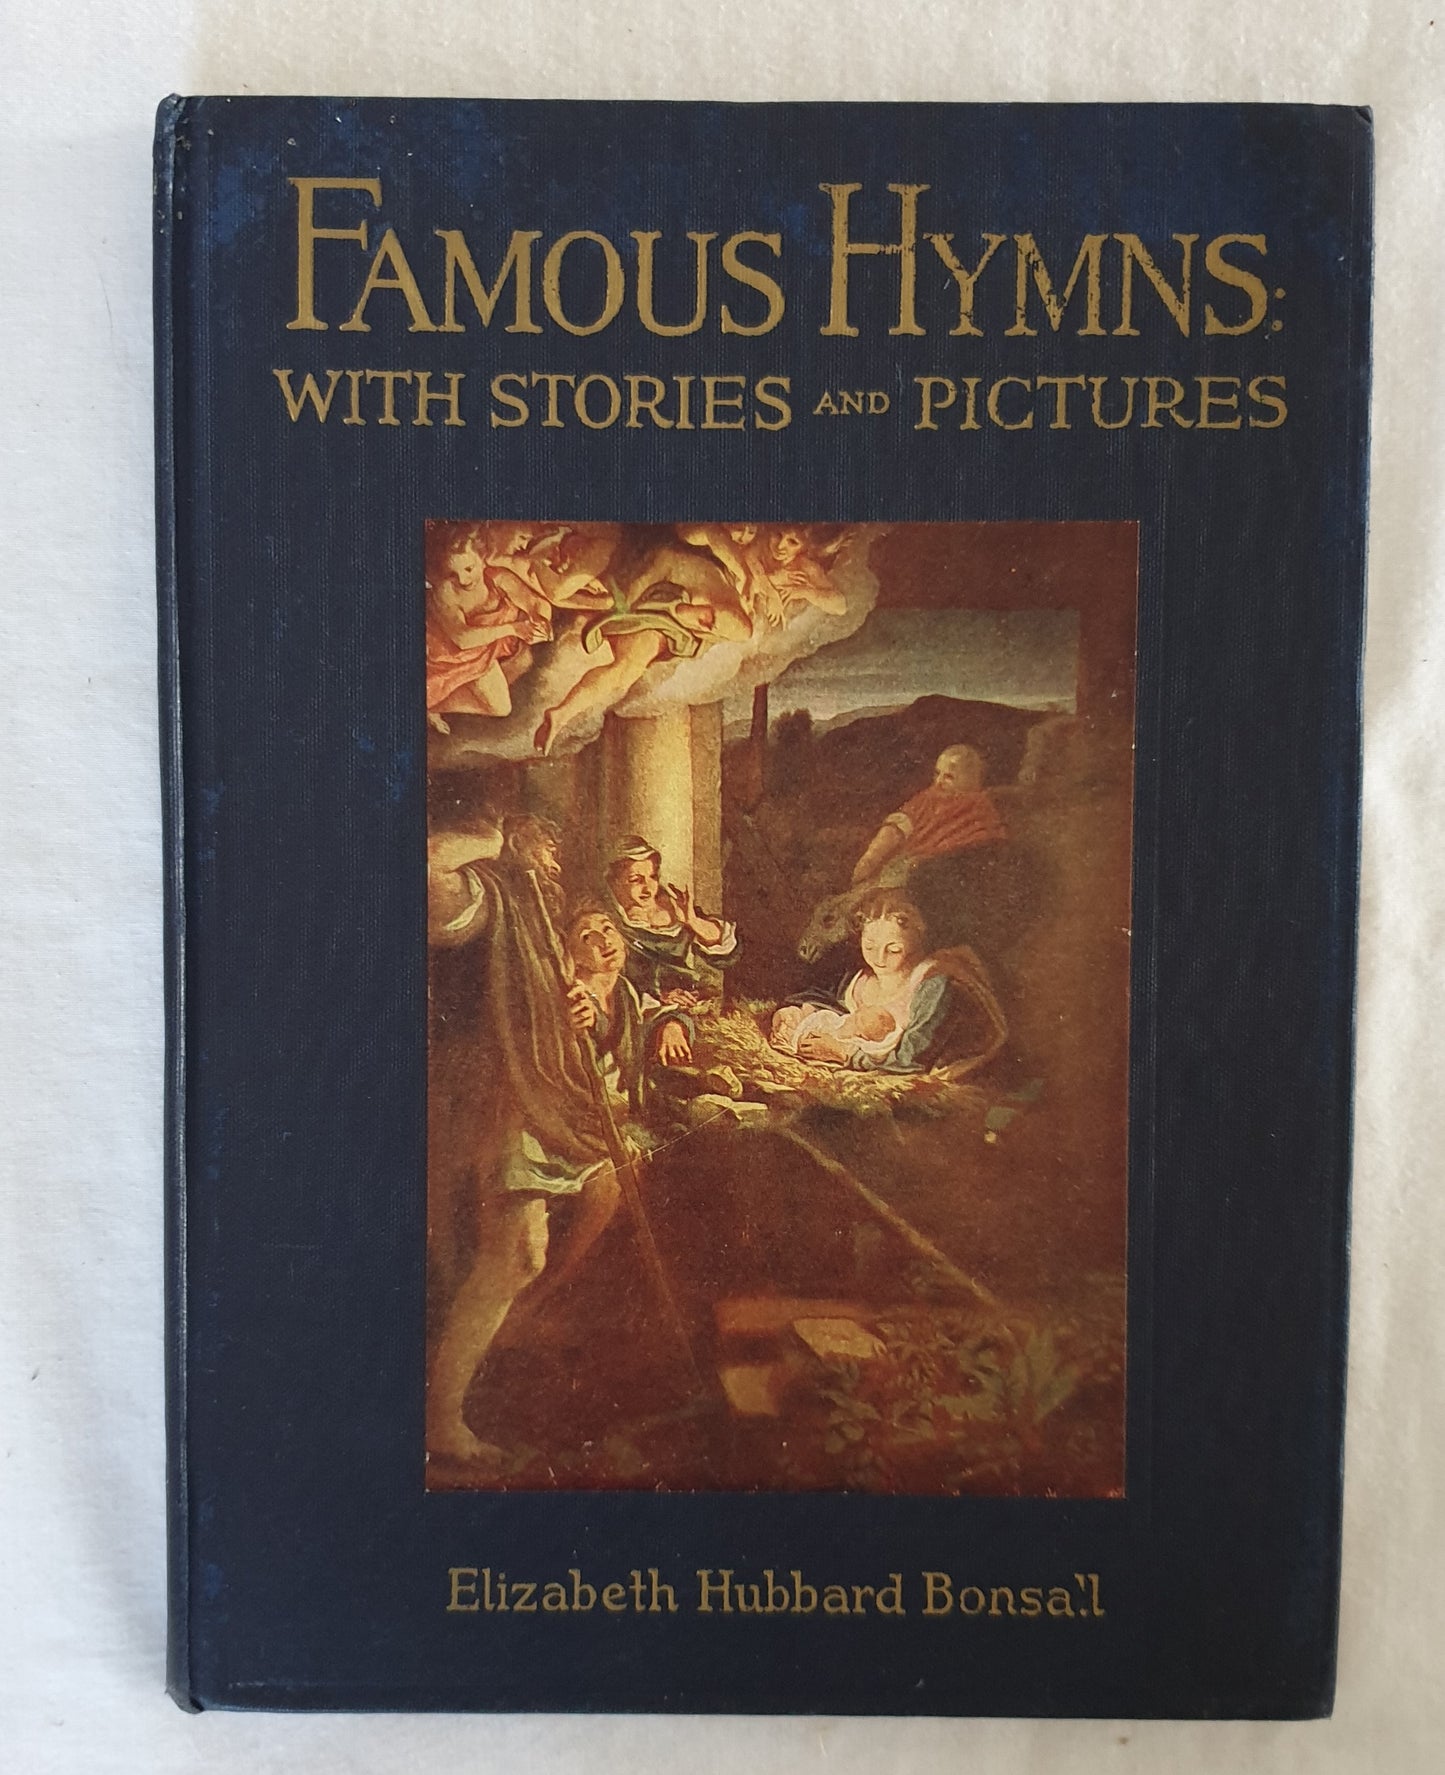 Famous Hymns by Elizabeth Hubbard Bonsall